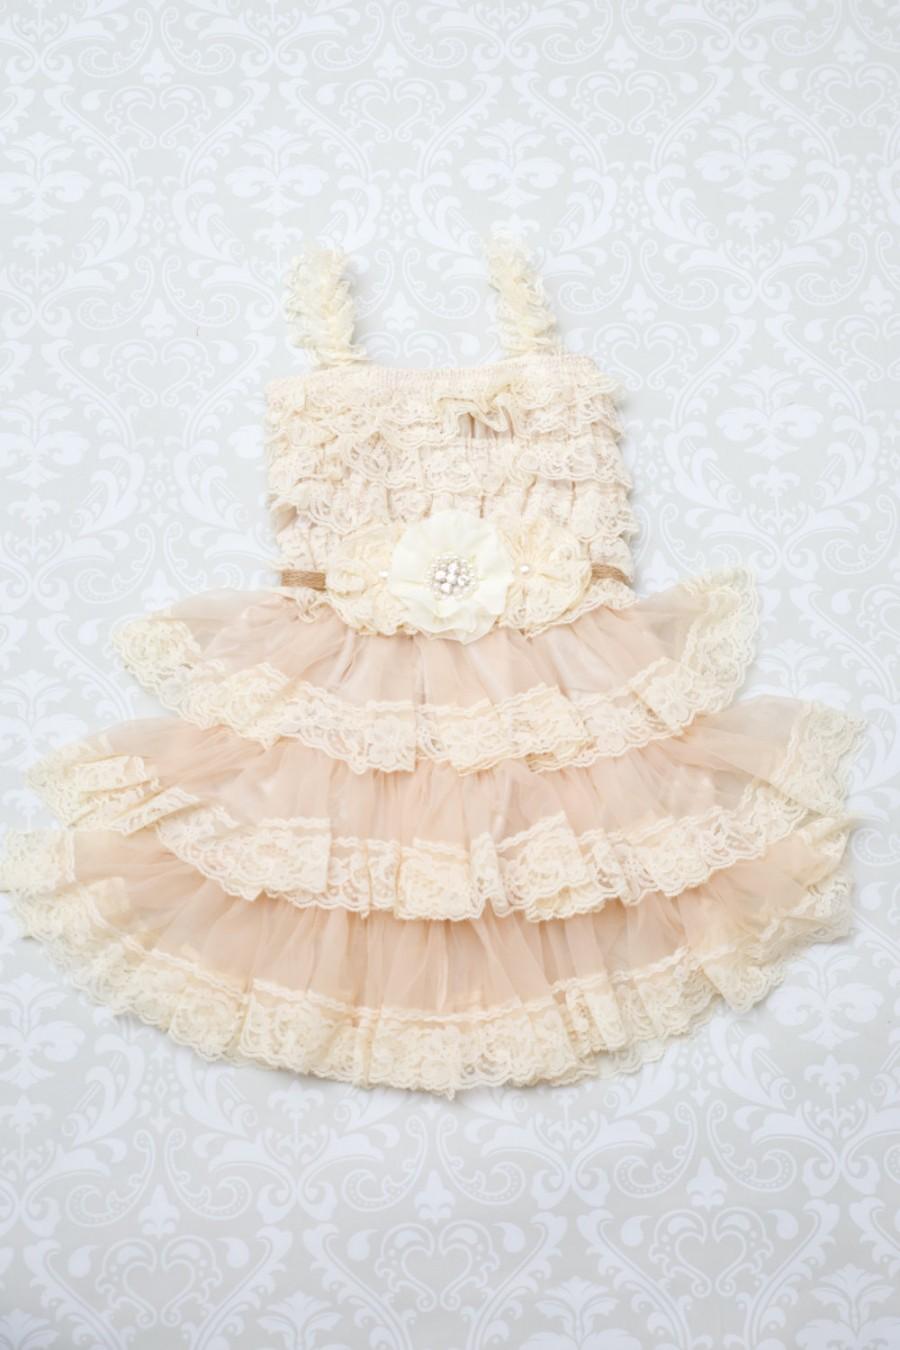 Mariage - Ivory Flower Girl Dress/Shabby Chic Flower Girl /Wheat Cream Flower Girl/Country Wedding-lvory-Champagne Flower Girl Dress-Shabby Chic Dress